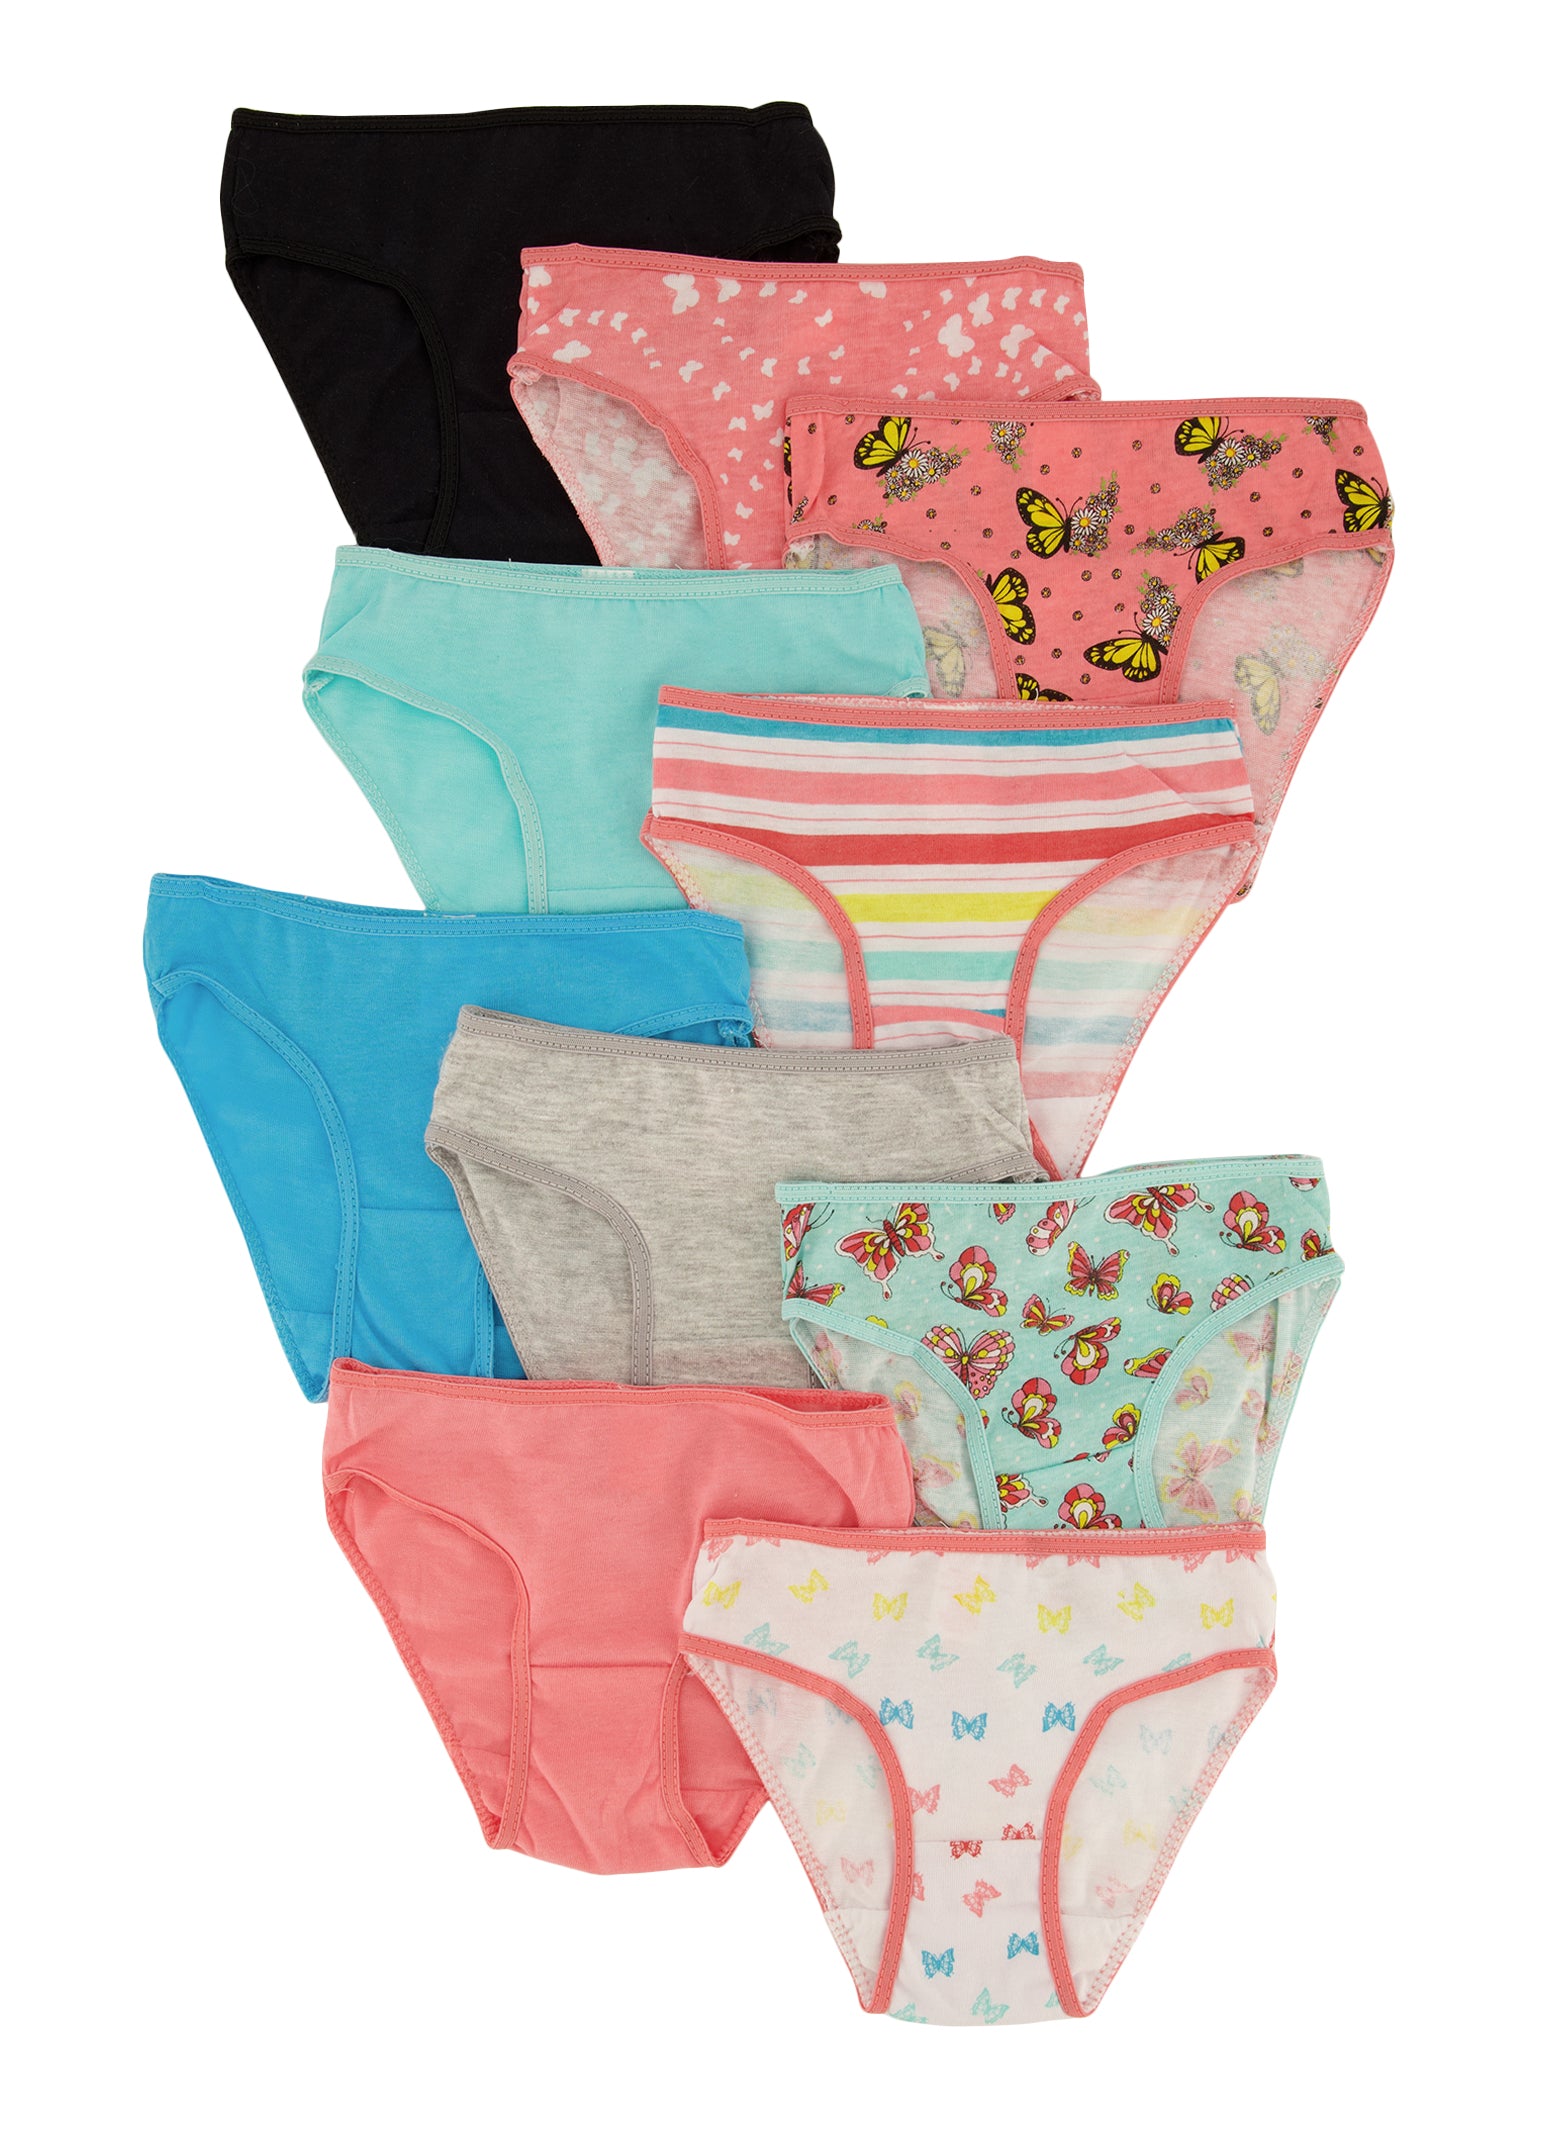 Hanes Womens 10-Pack Cotton Briefs Lady Underwear Panties Assorted